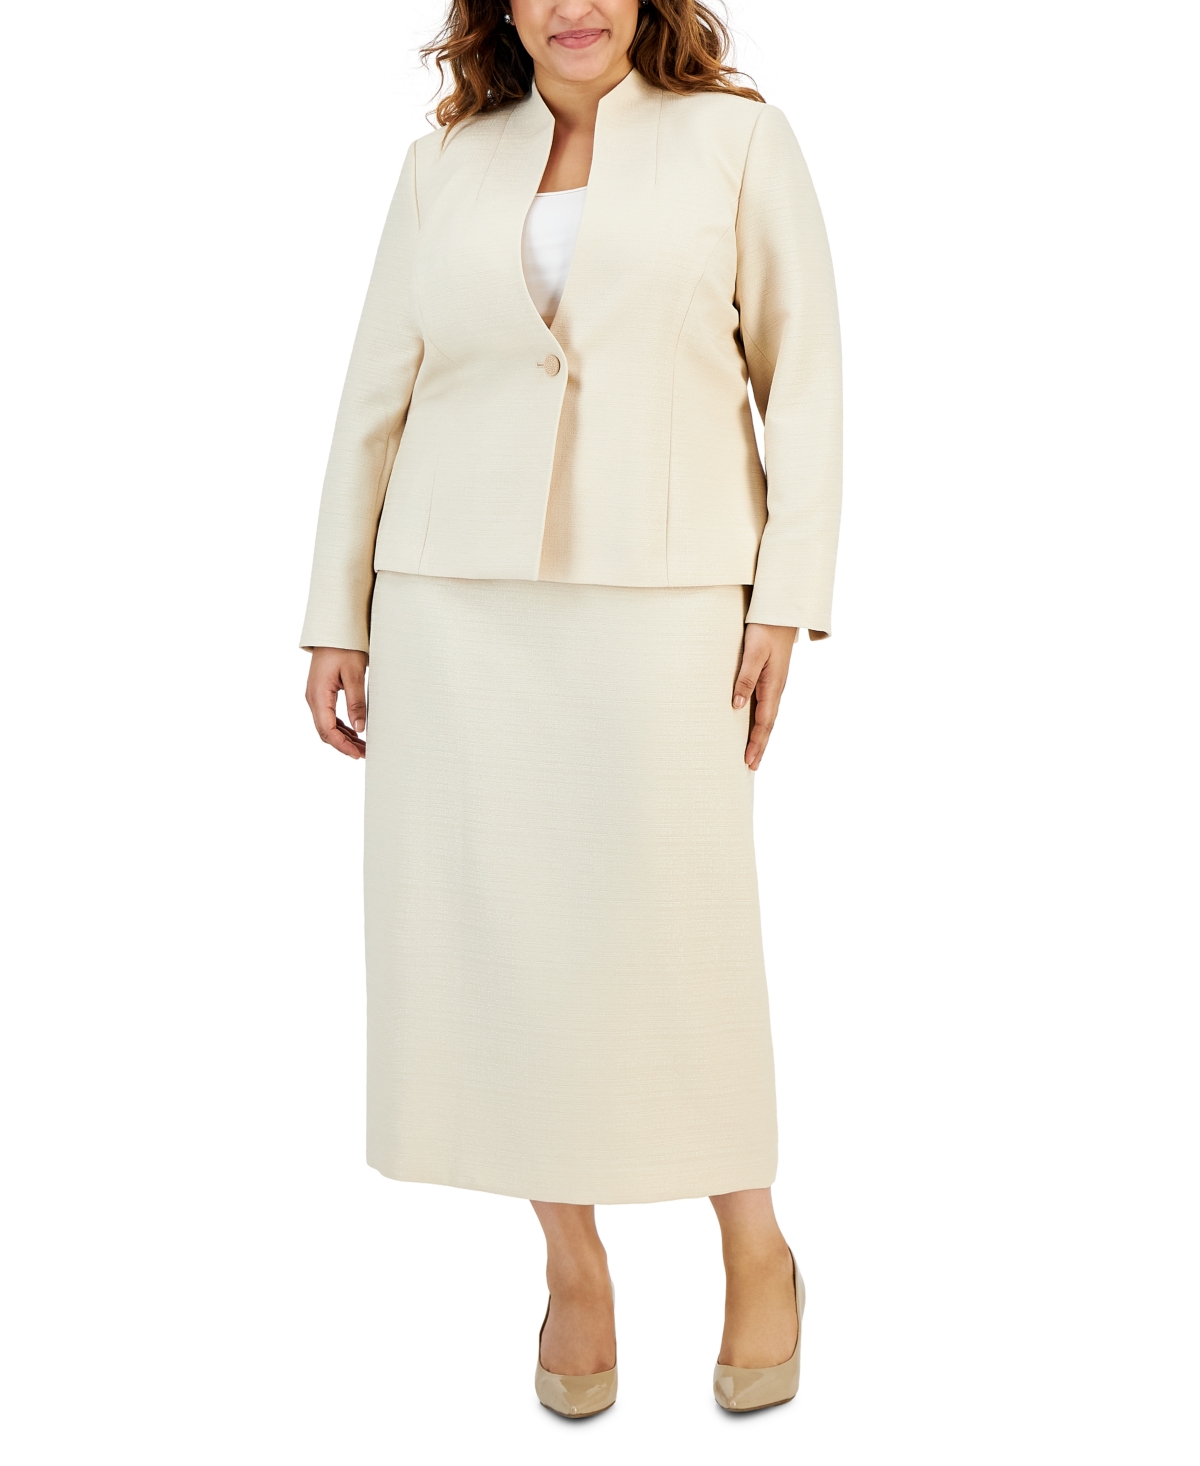 Le Suit Plus Size Shimmer Tweed Jacket & Midi Skirt